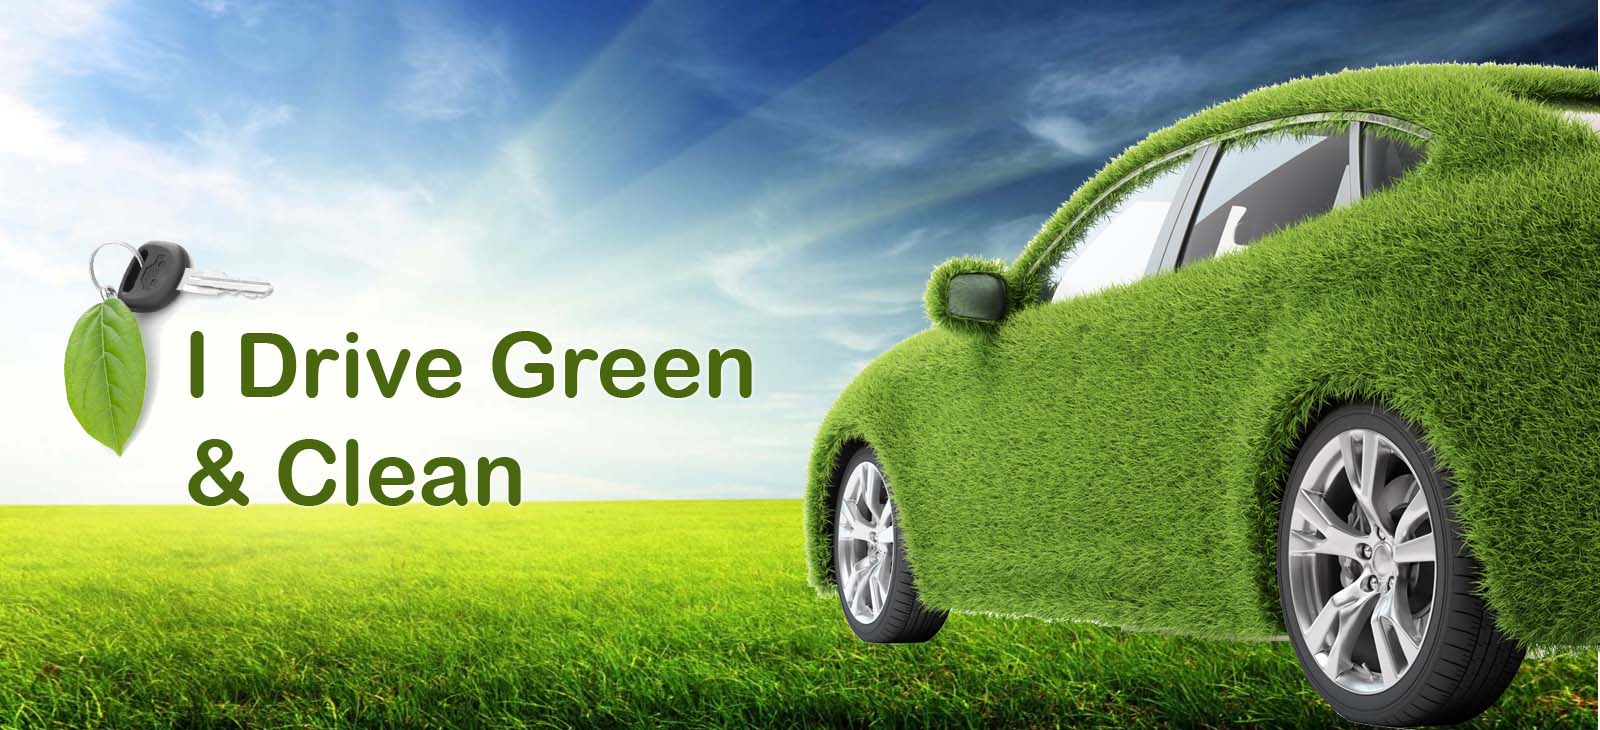 Citygas India Cng Car Green Fuel Save Environment